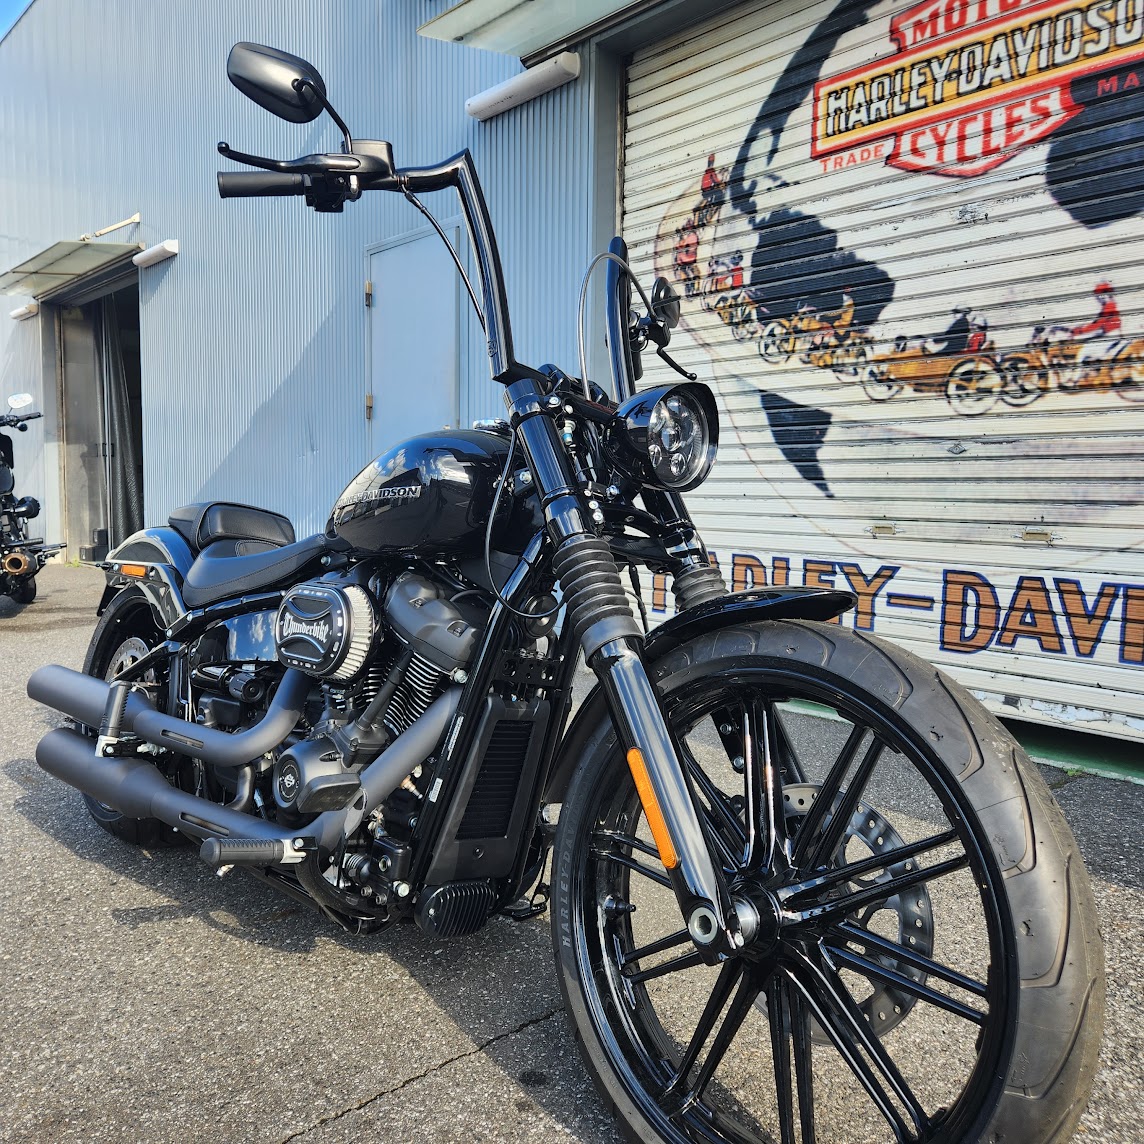 FXBRブレイクアウト オールブラックアウト - Harley-Davidson® 幕張